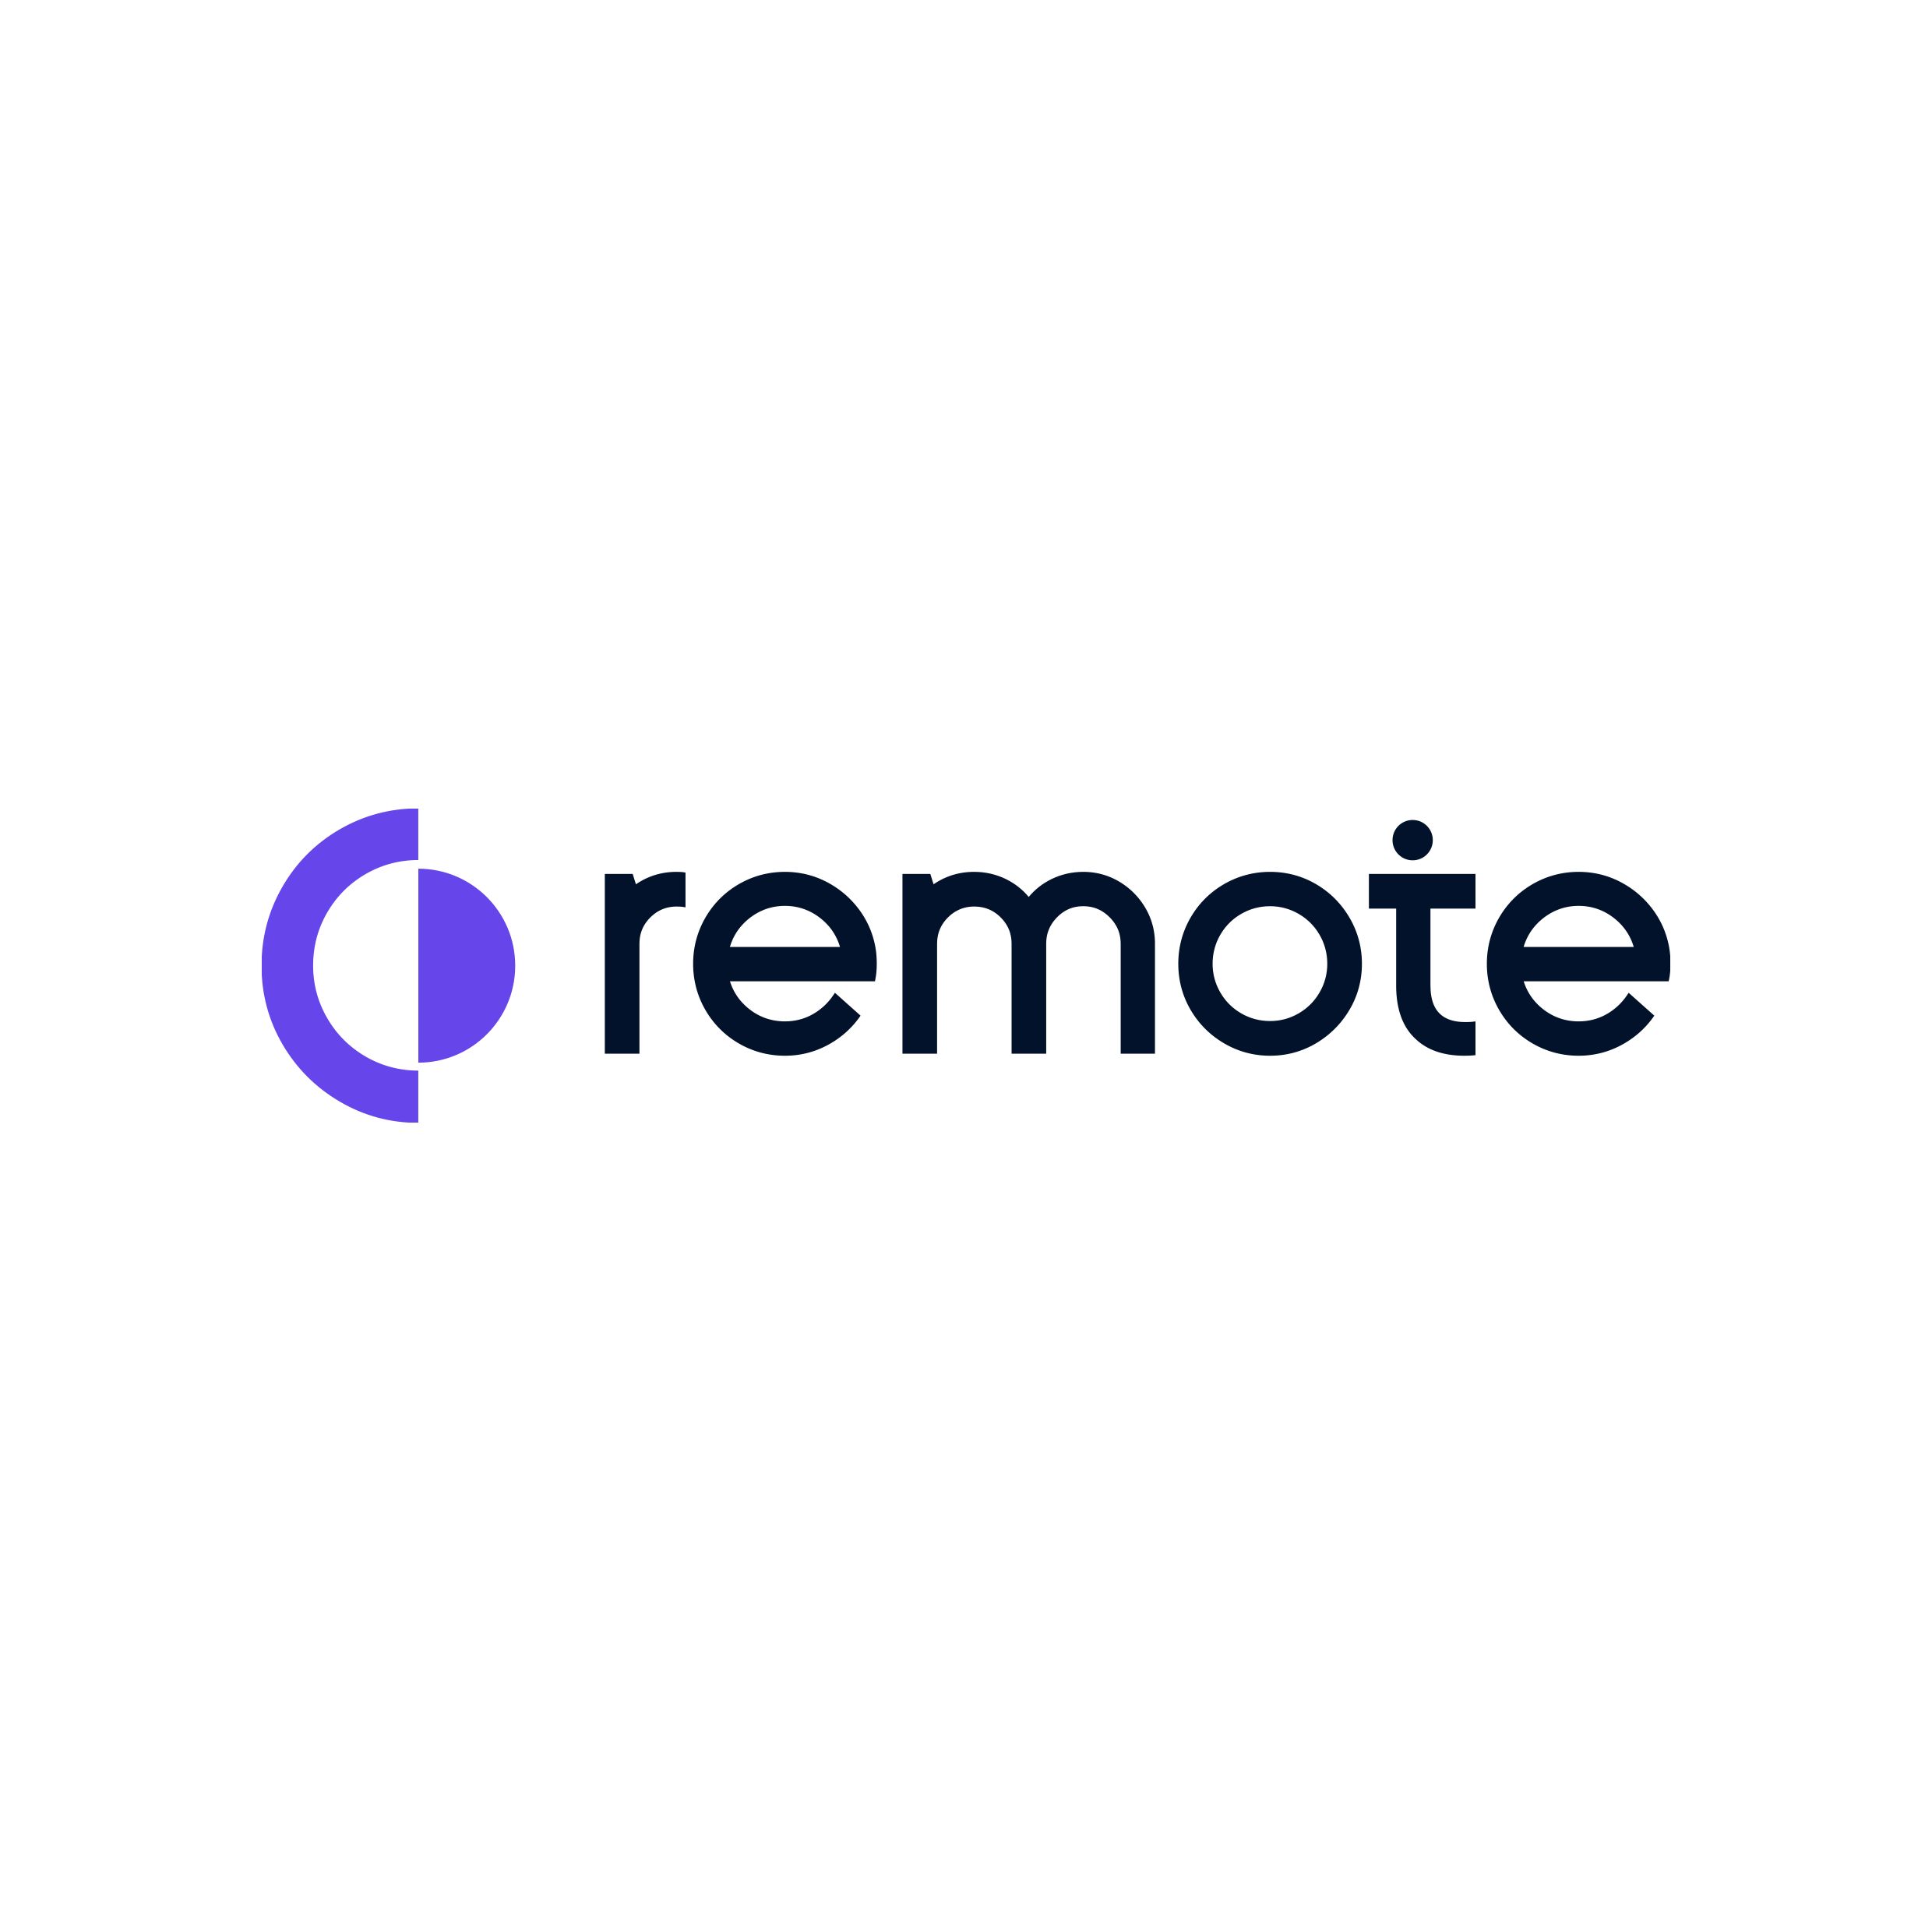 Remote - Logo